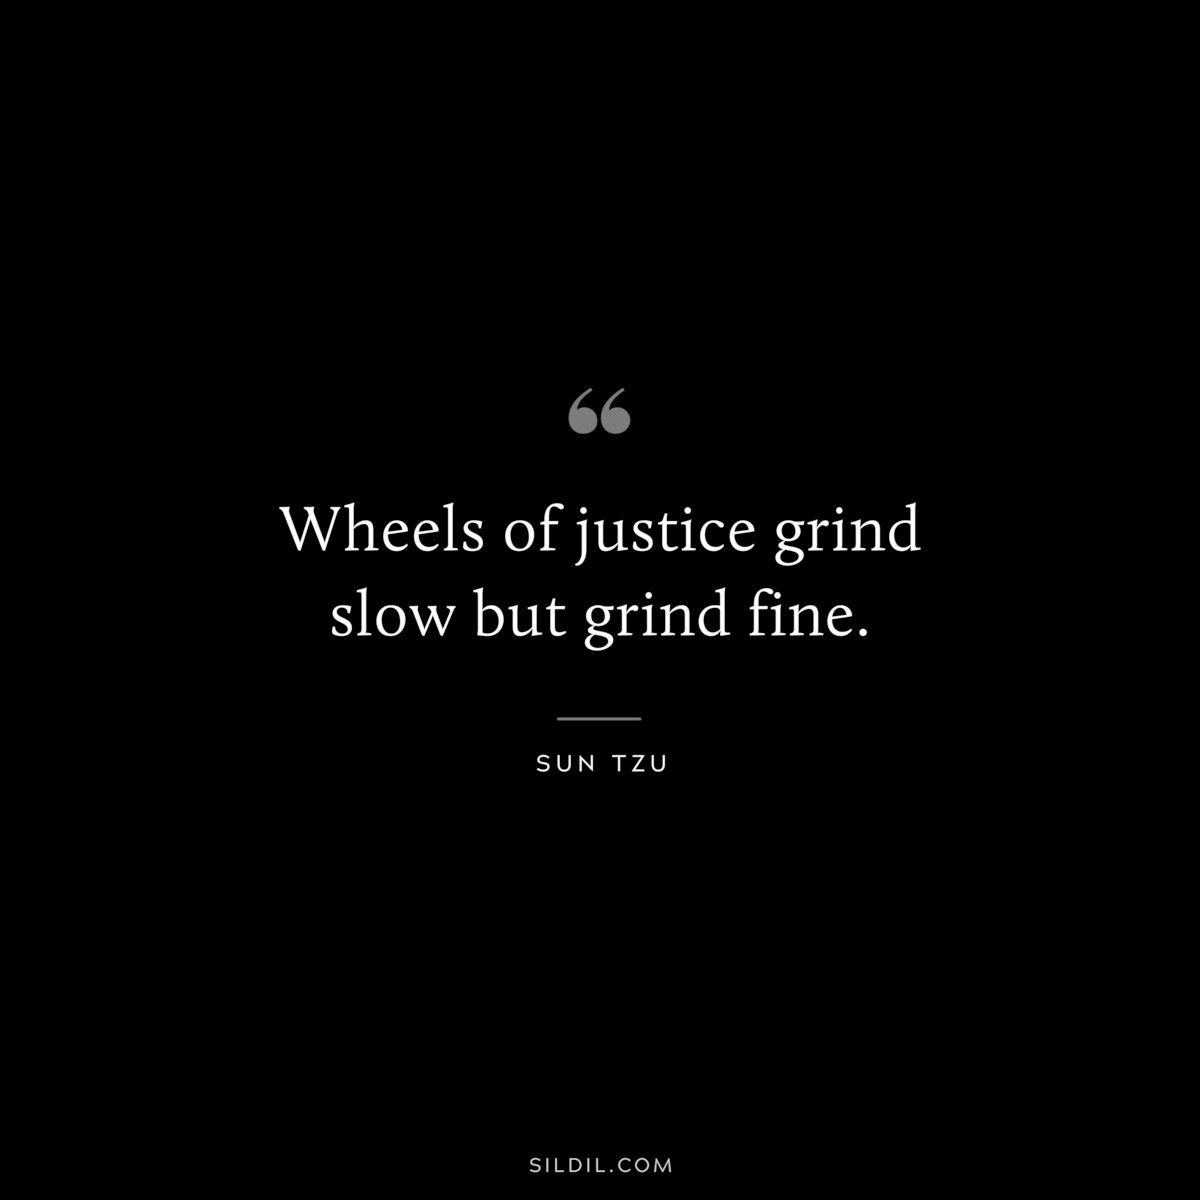 Wheels of justice grind slow but grind fine.― Sun Tzu